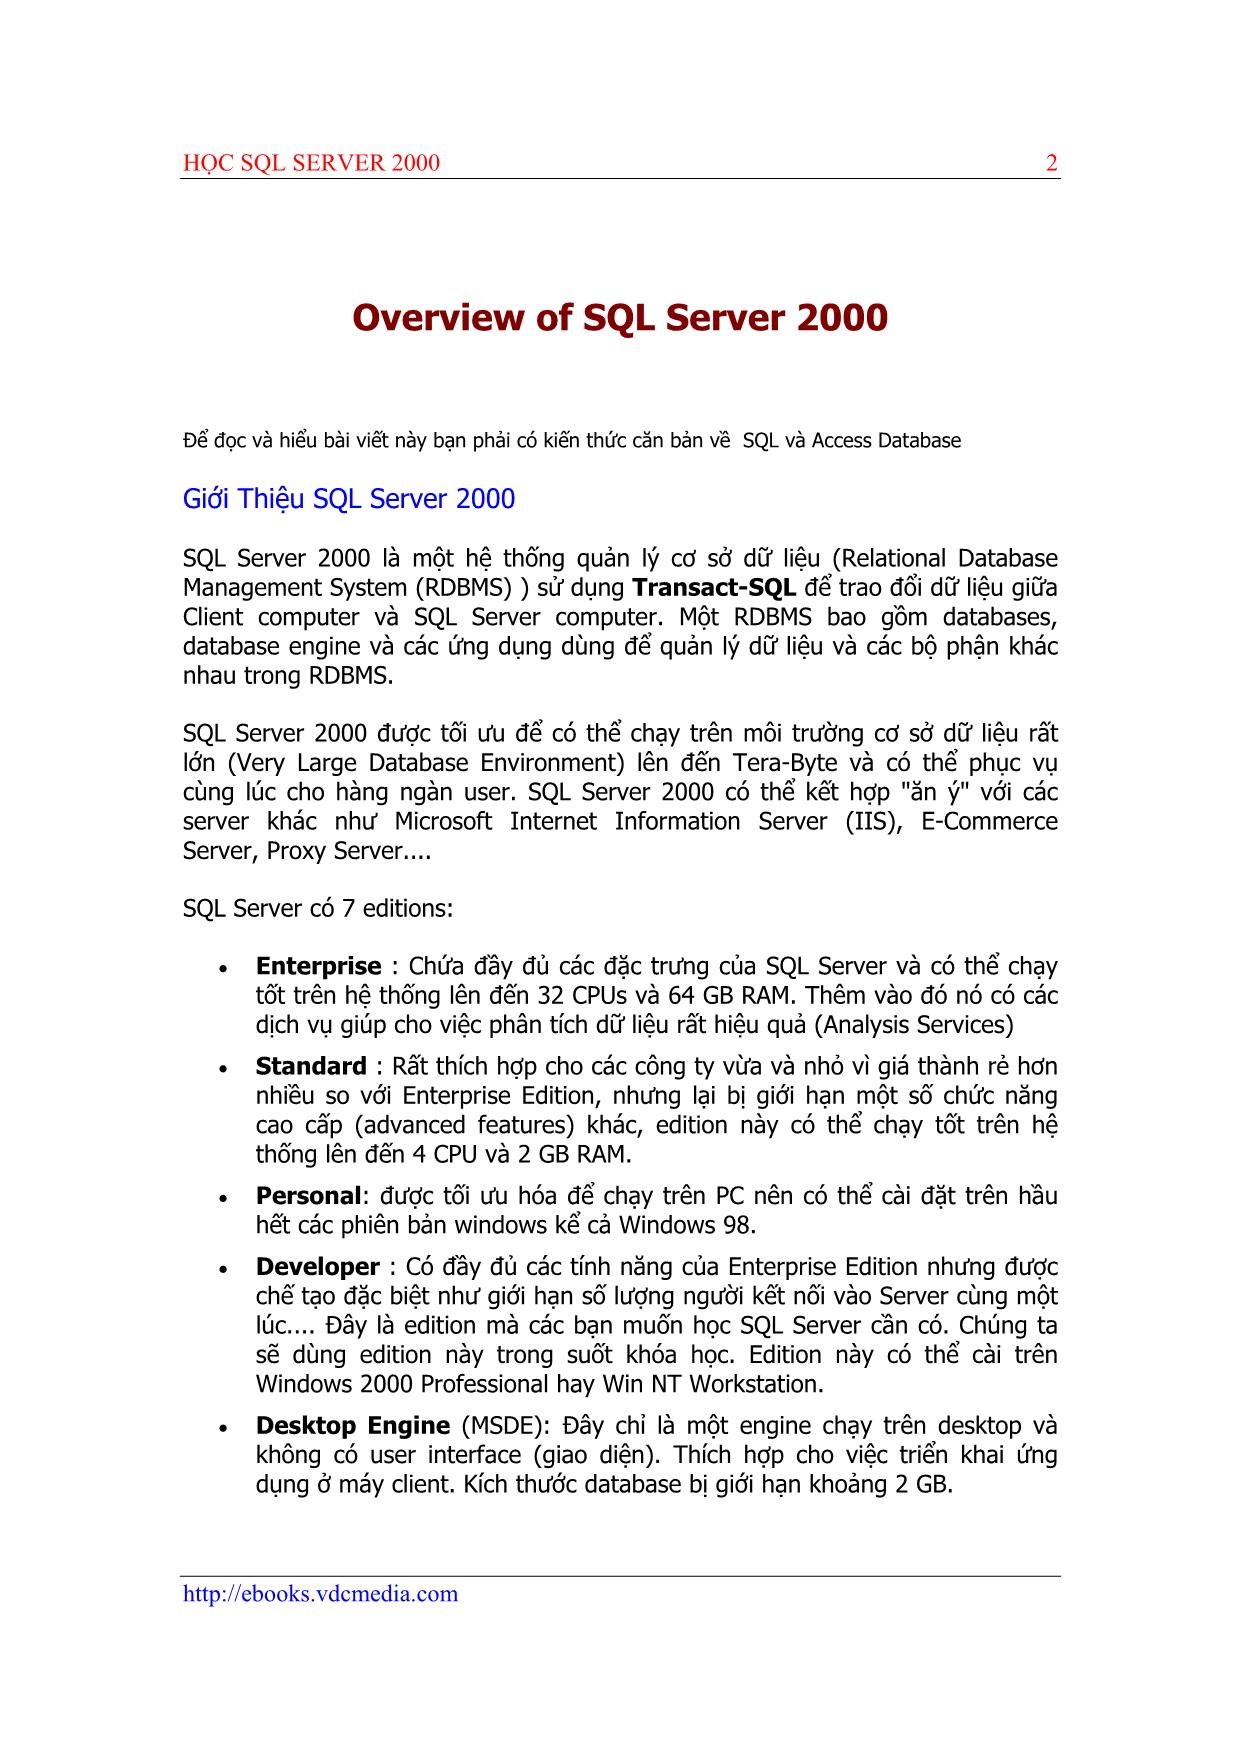 Học SQL Server 2000 trang 2